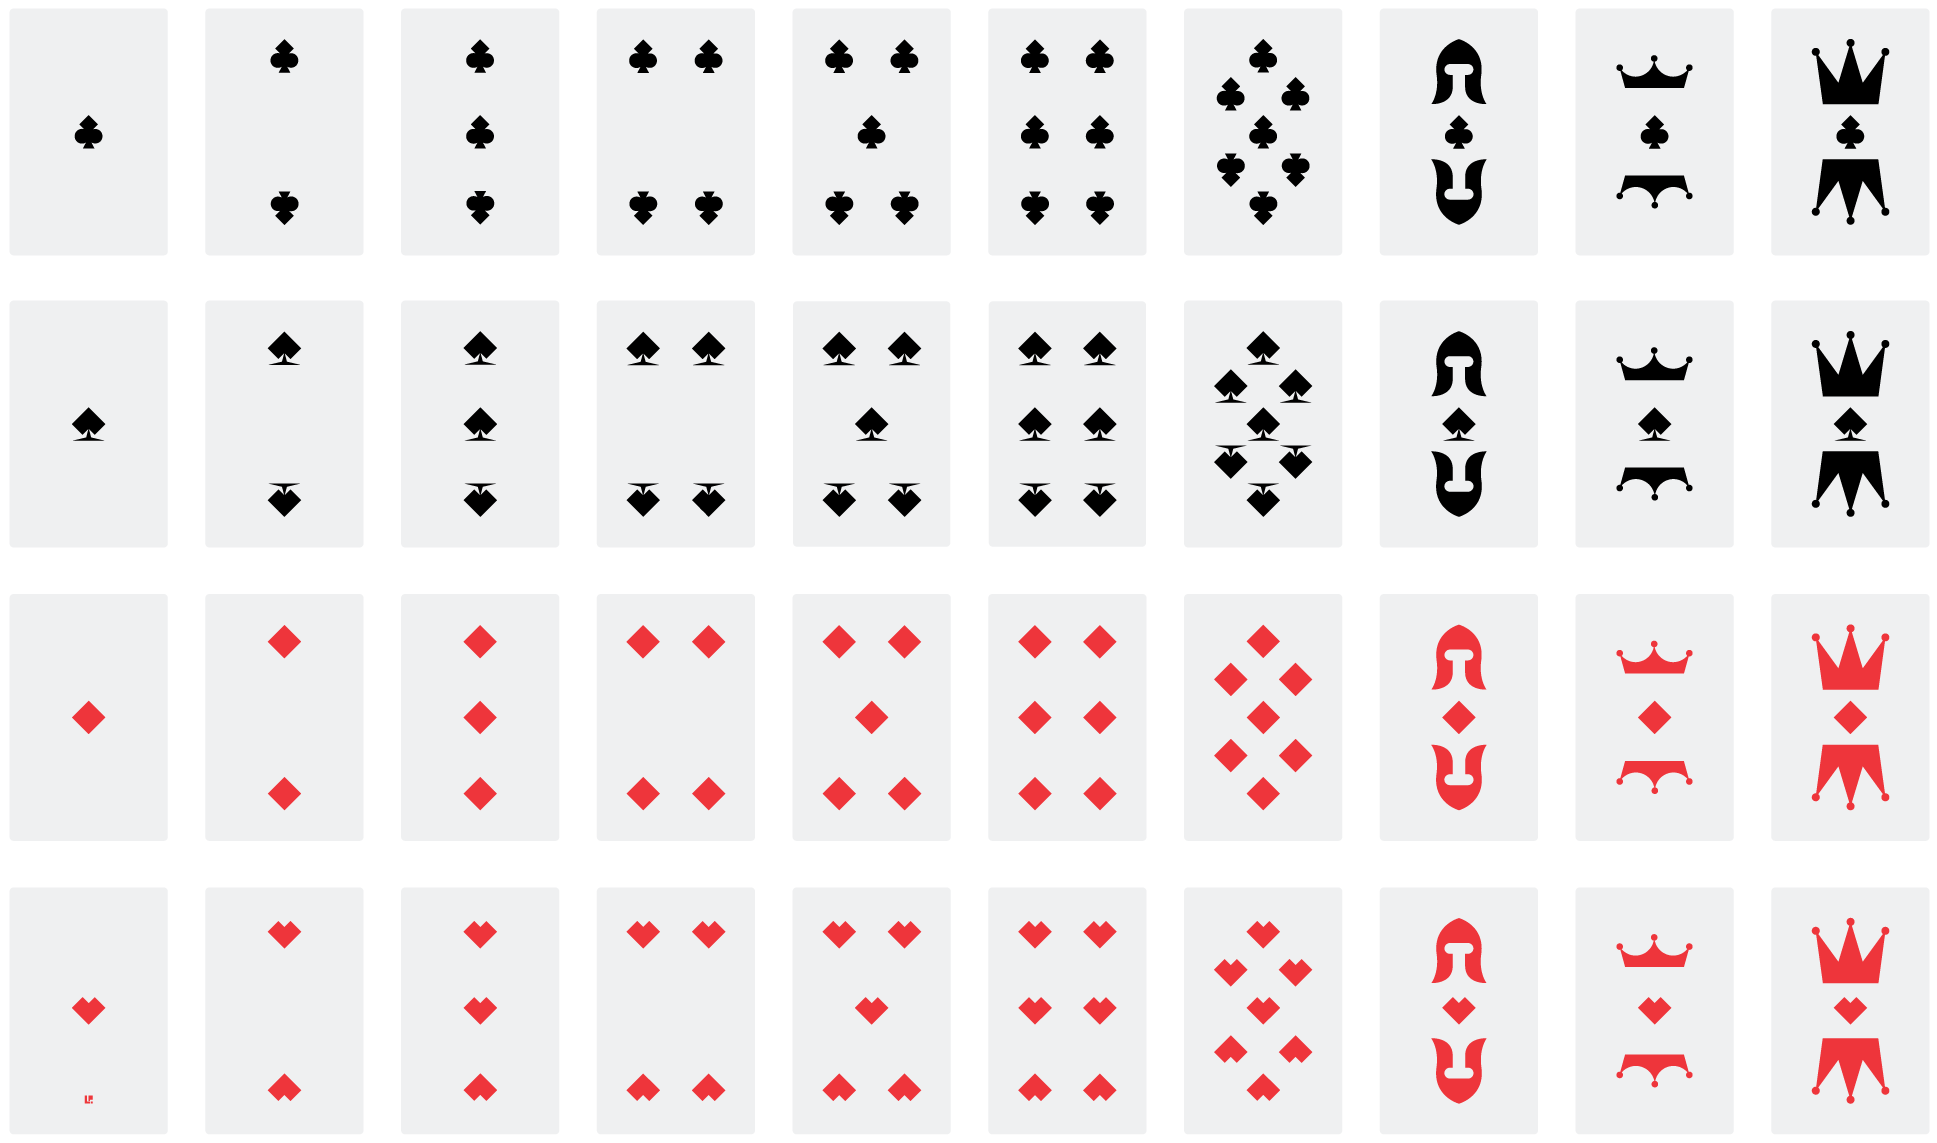 Design of all 40 Minimalist Italian Playing Cards - North Western Regional Style